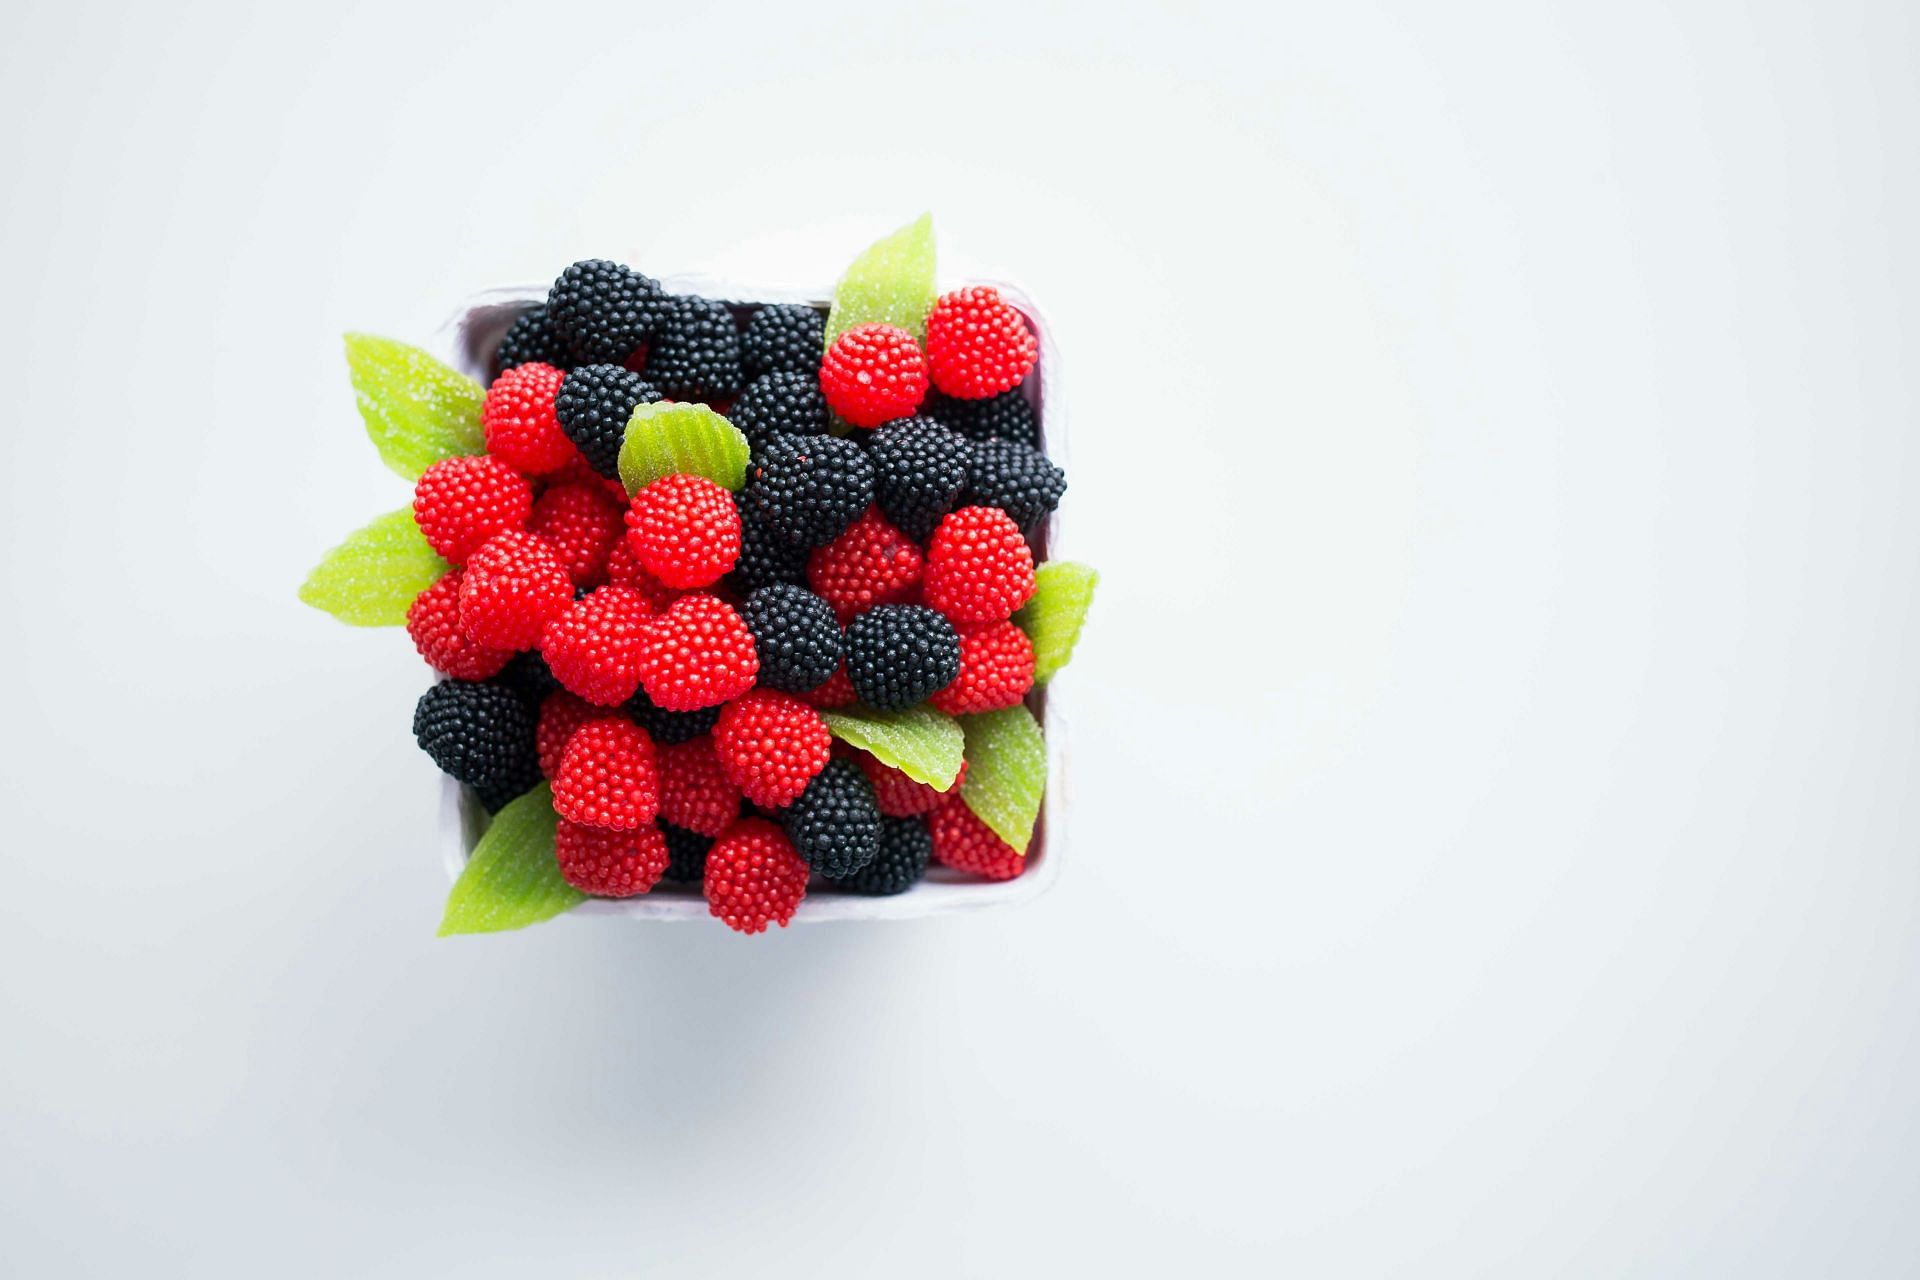 These berries come under zero-calorie foods (Image by Brooke Lark/Unsplash)